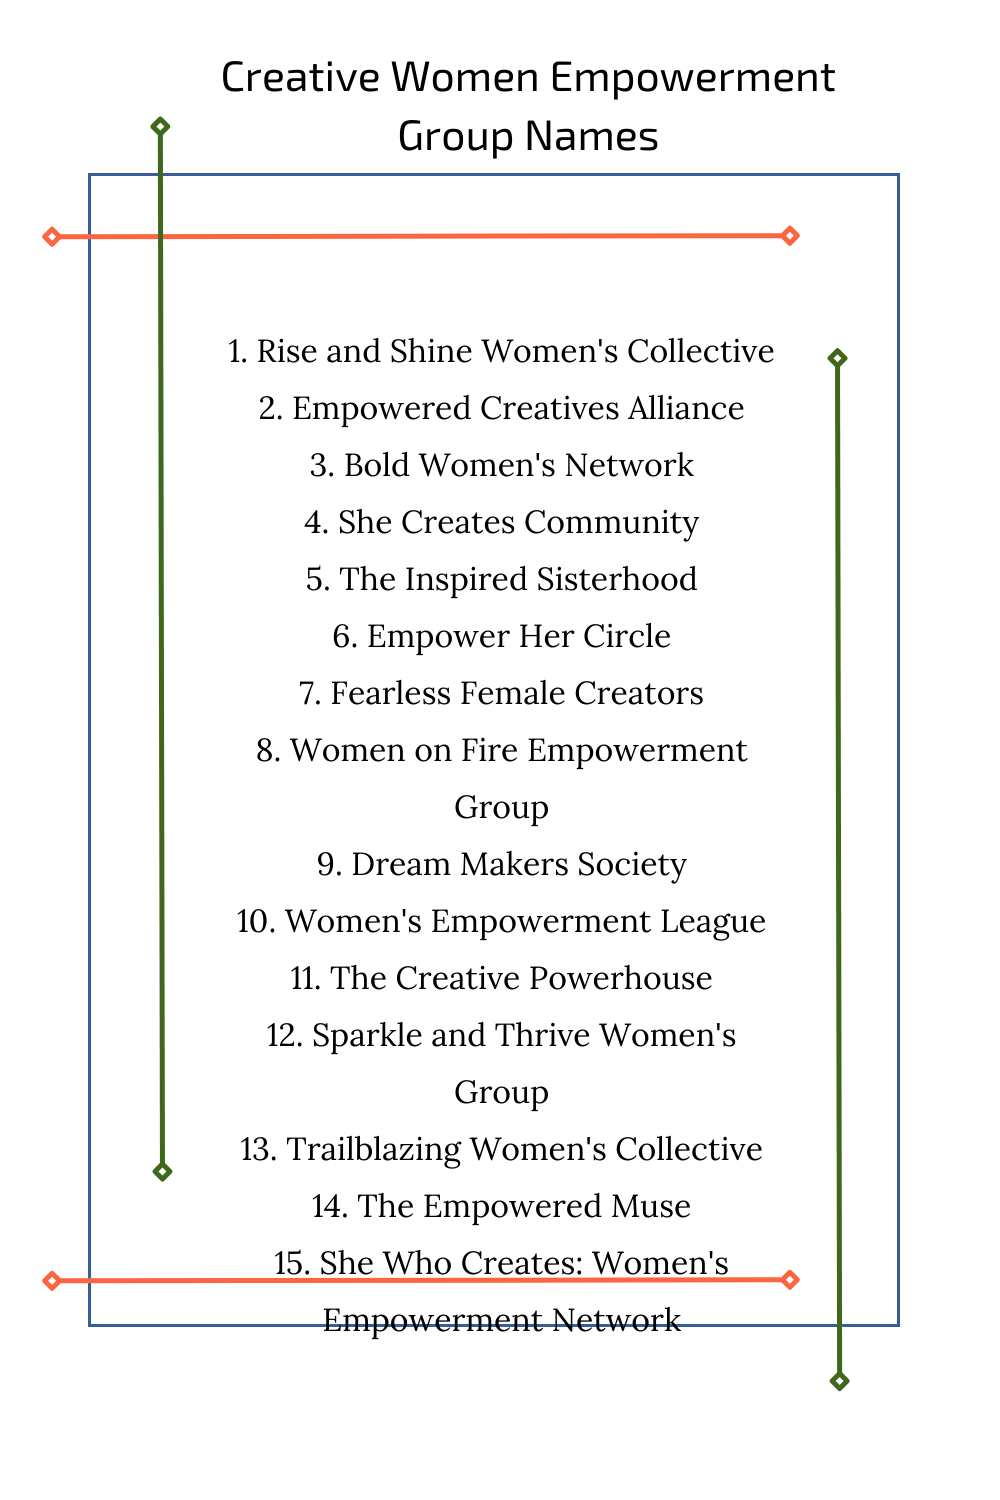 Creative Women Empowerment Group Names